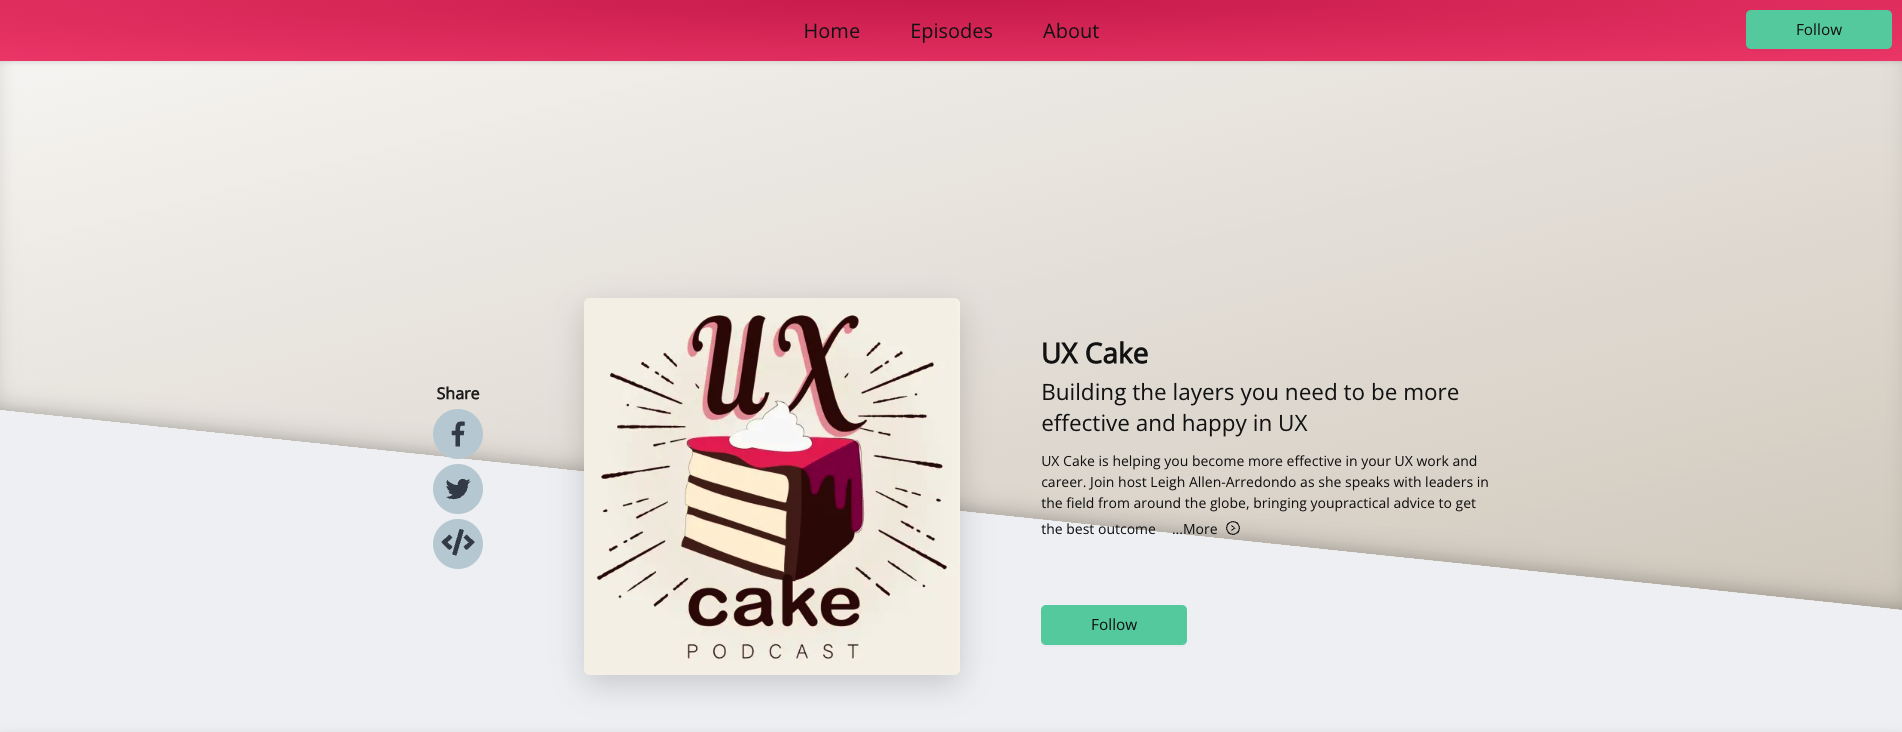 UX Cake podcast